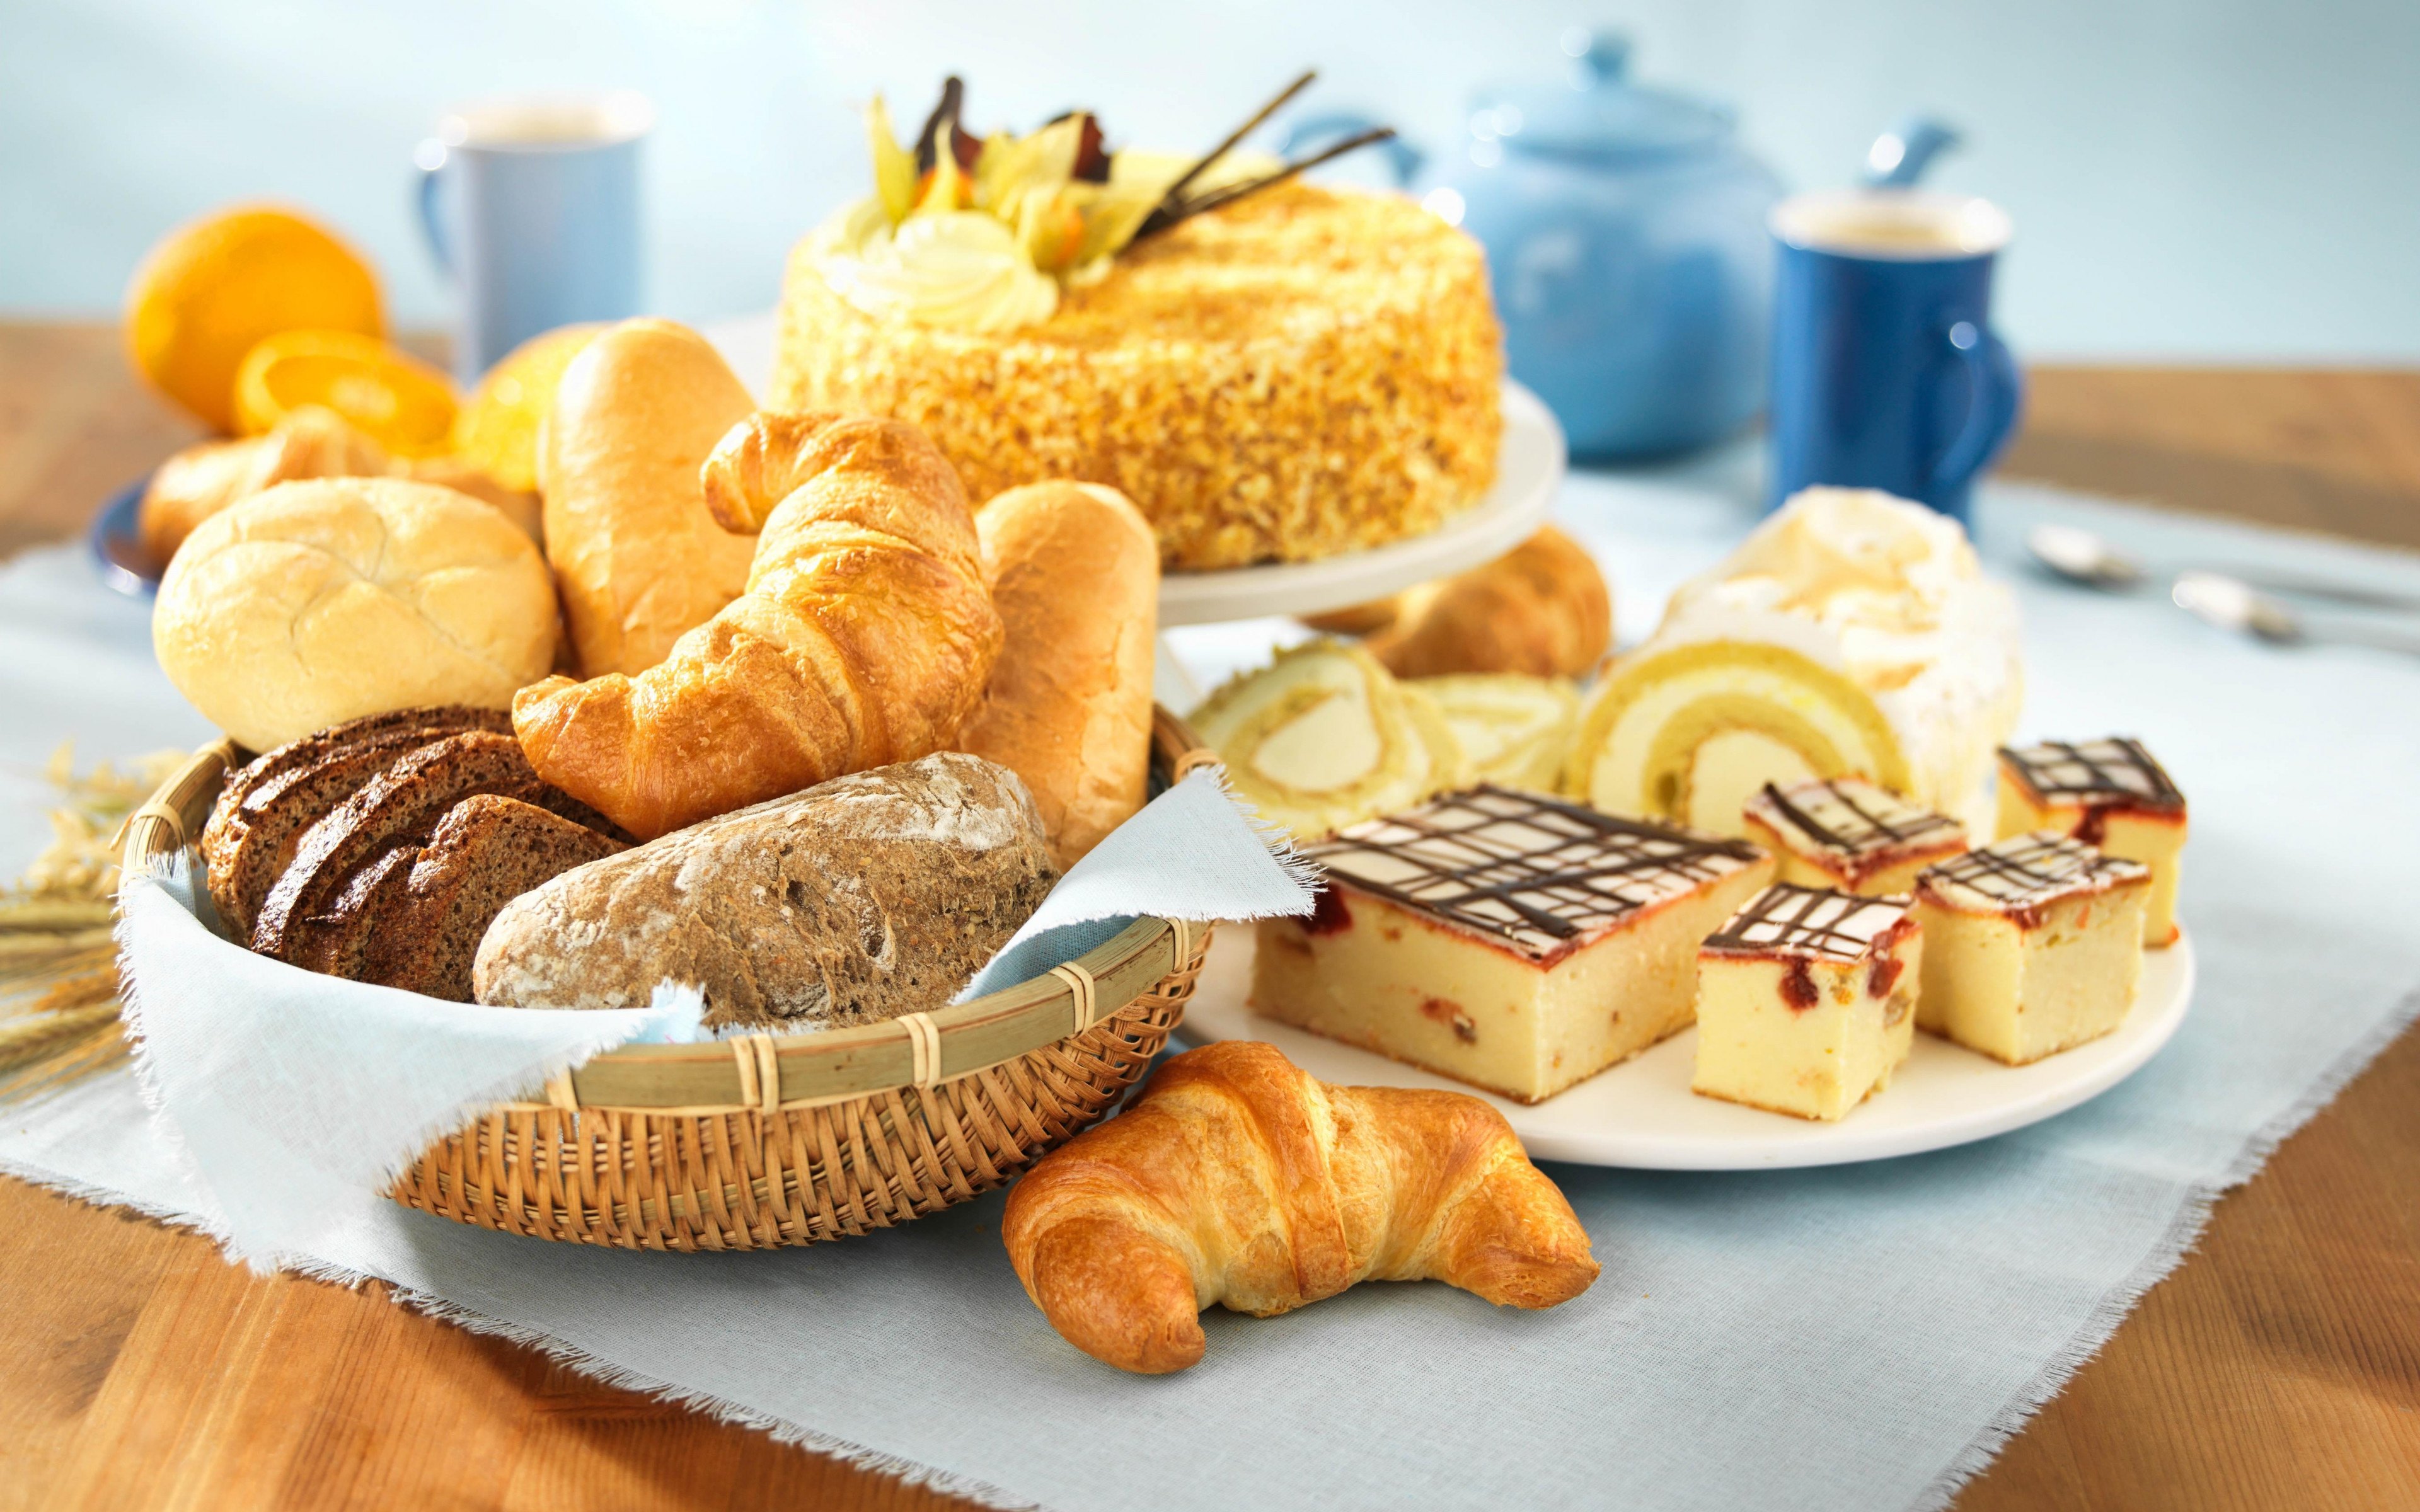 3840x2400_pastries-cakes-croissants